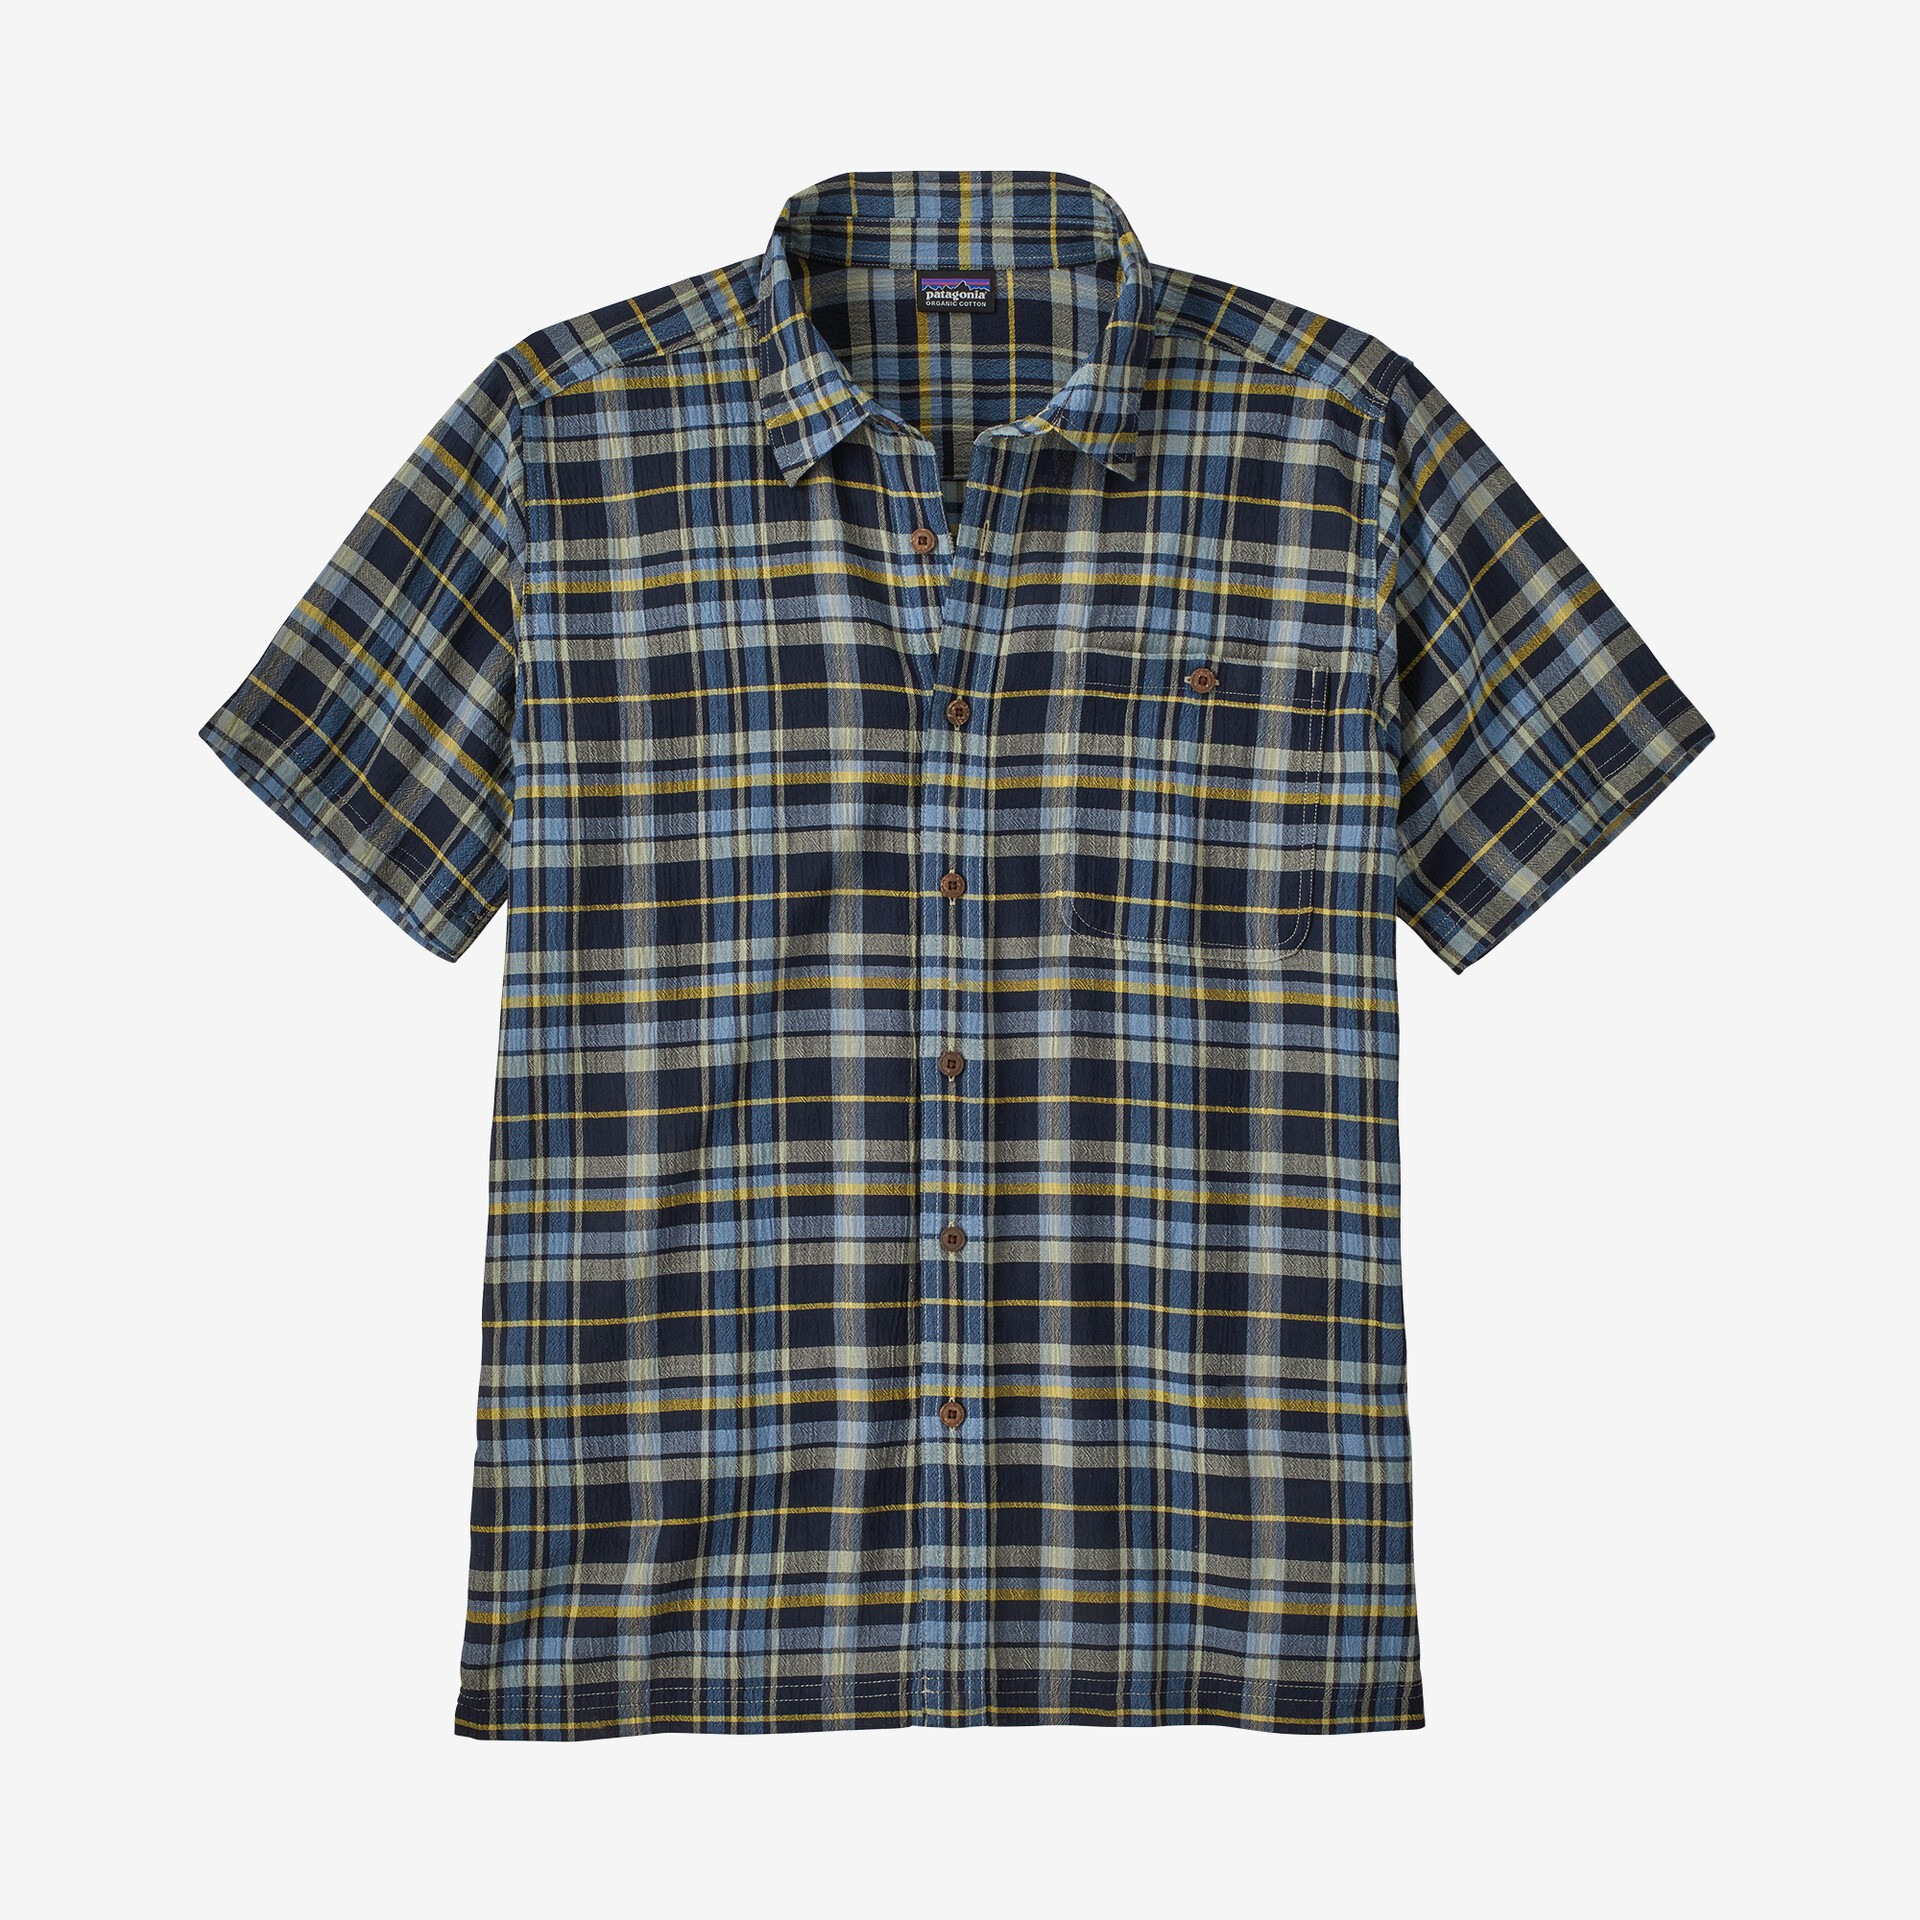 A/C Shirt, paint plaid tidepool blue